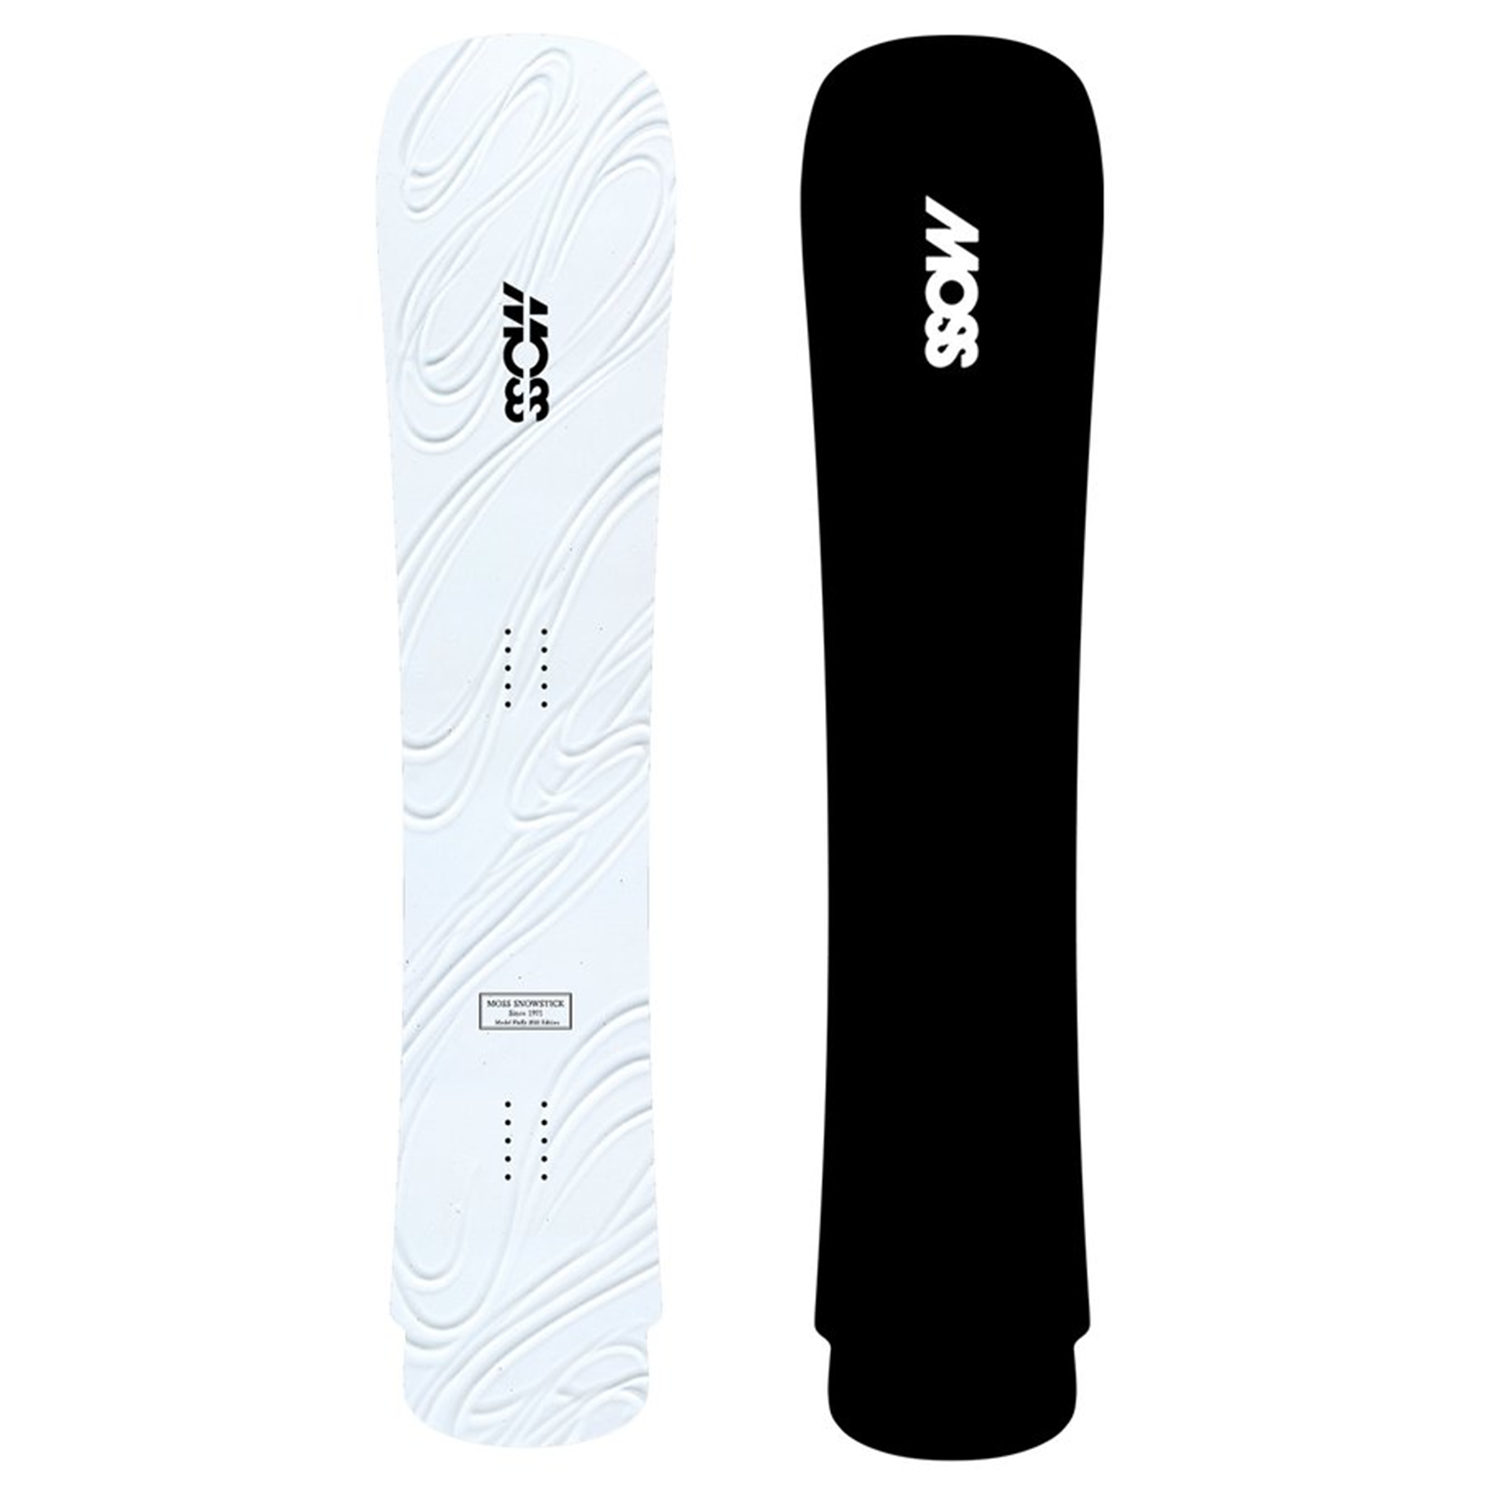 MOSS SNOWSTICK WING PIN 54 154 専用ソールカバー付 - スノーボード